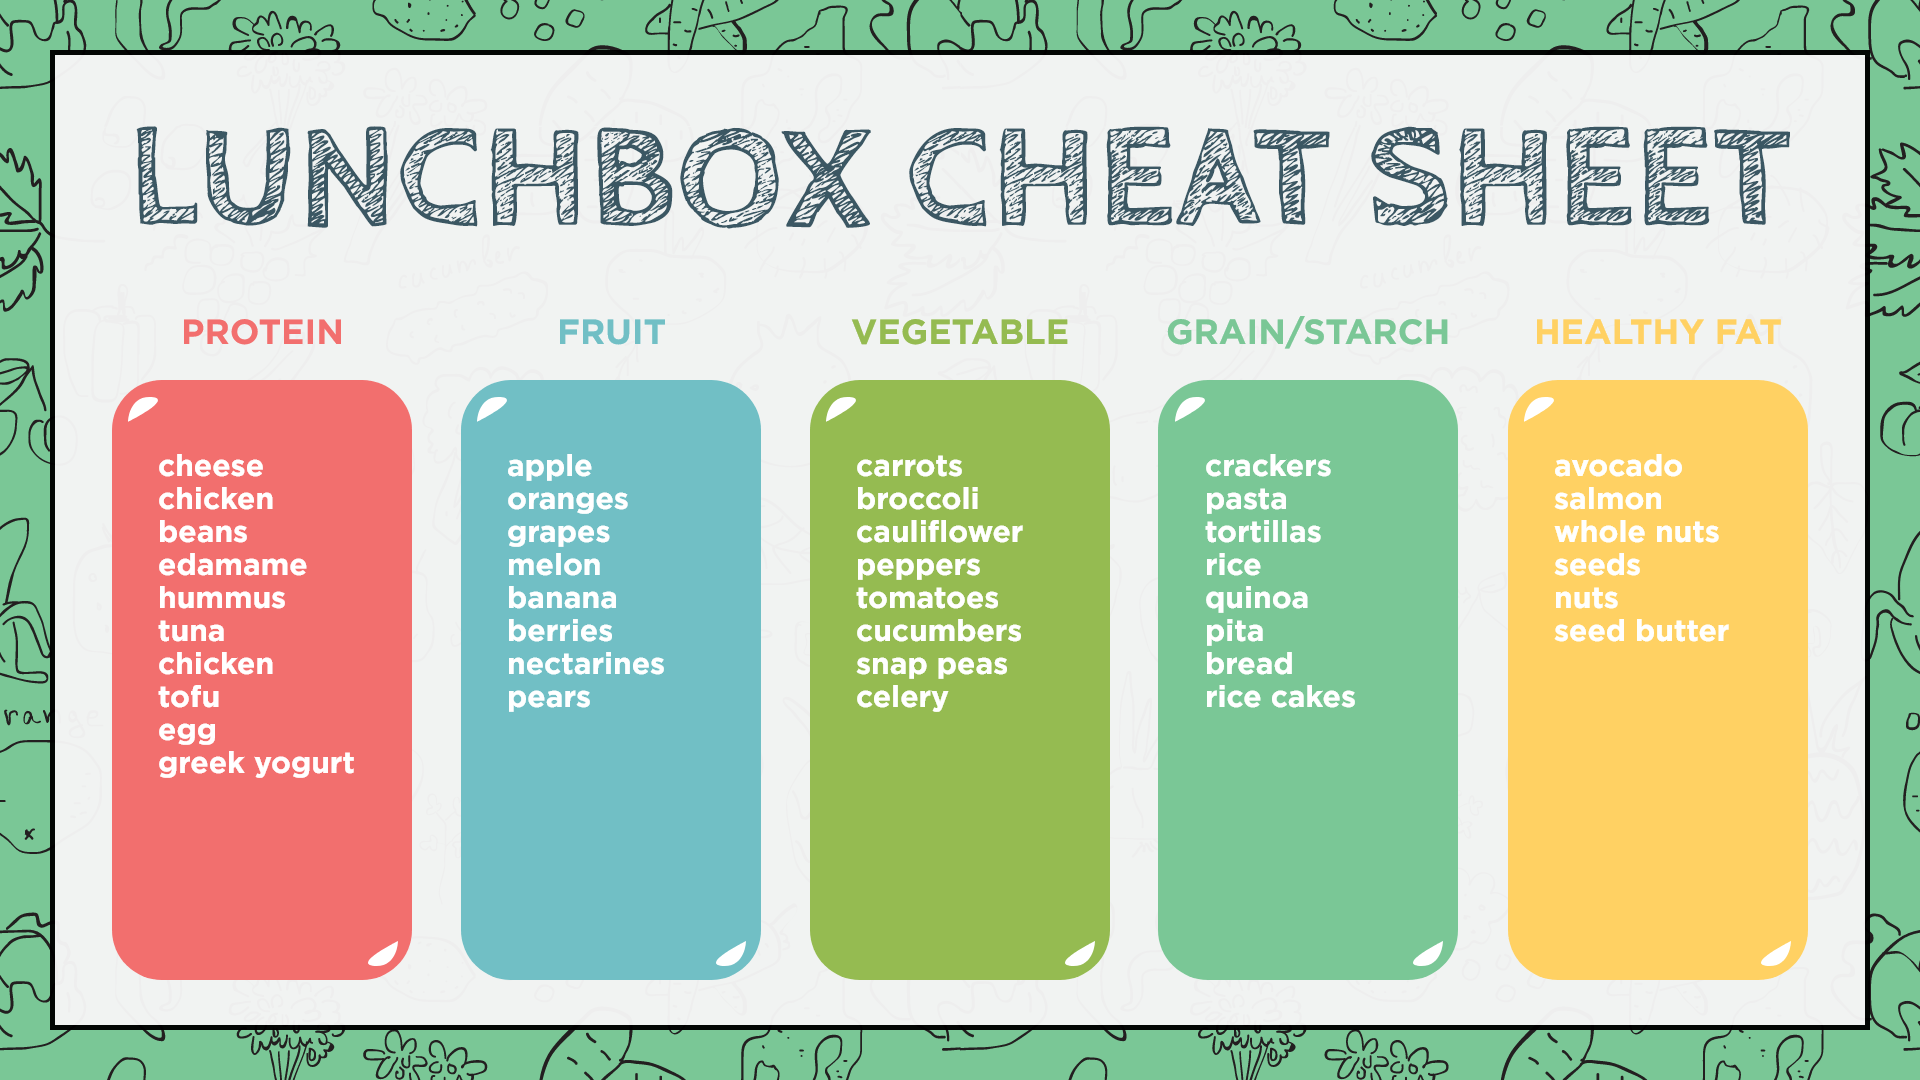 Lunch box cheat sheet